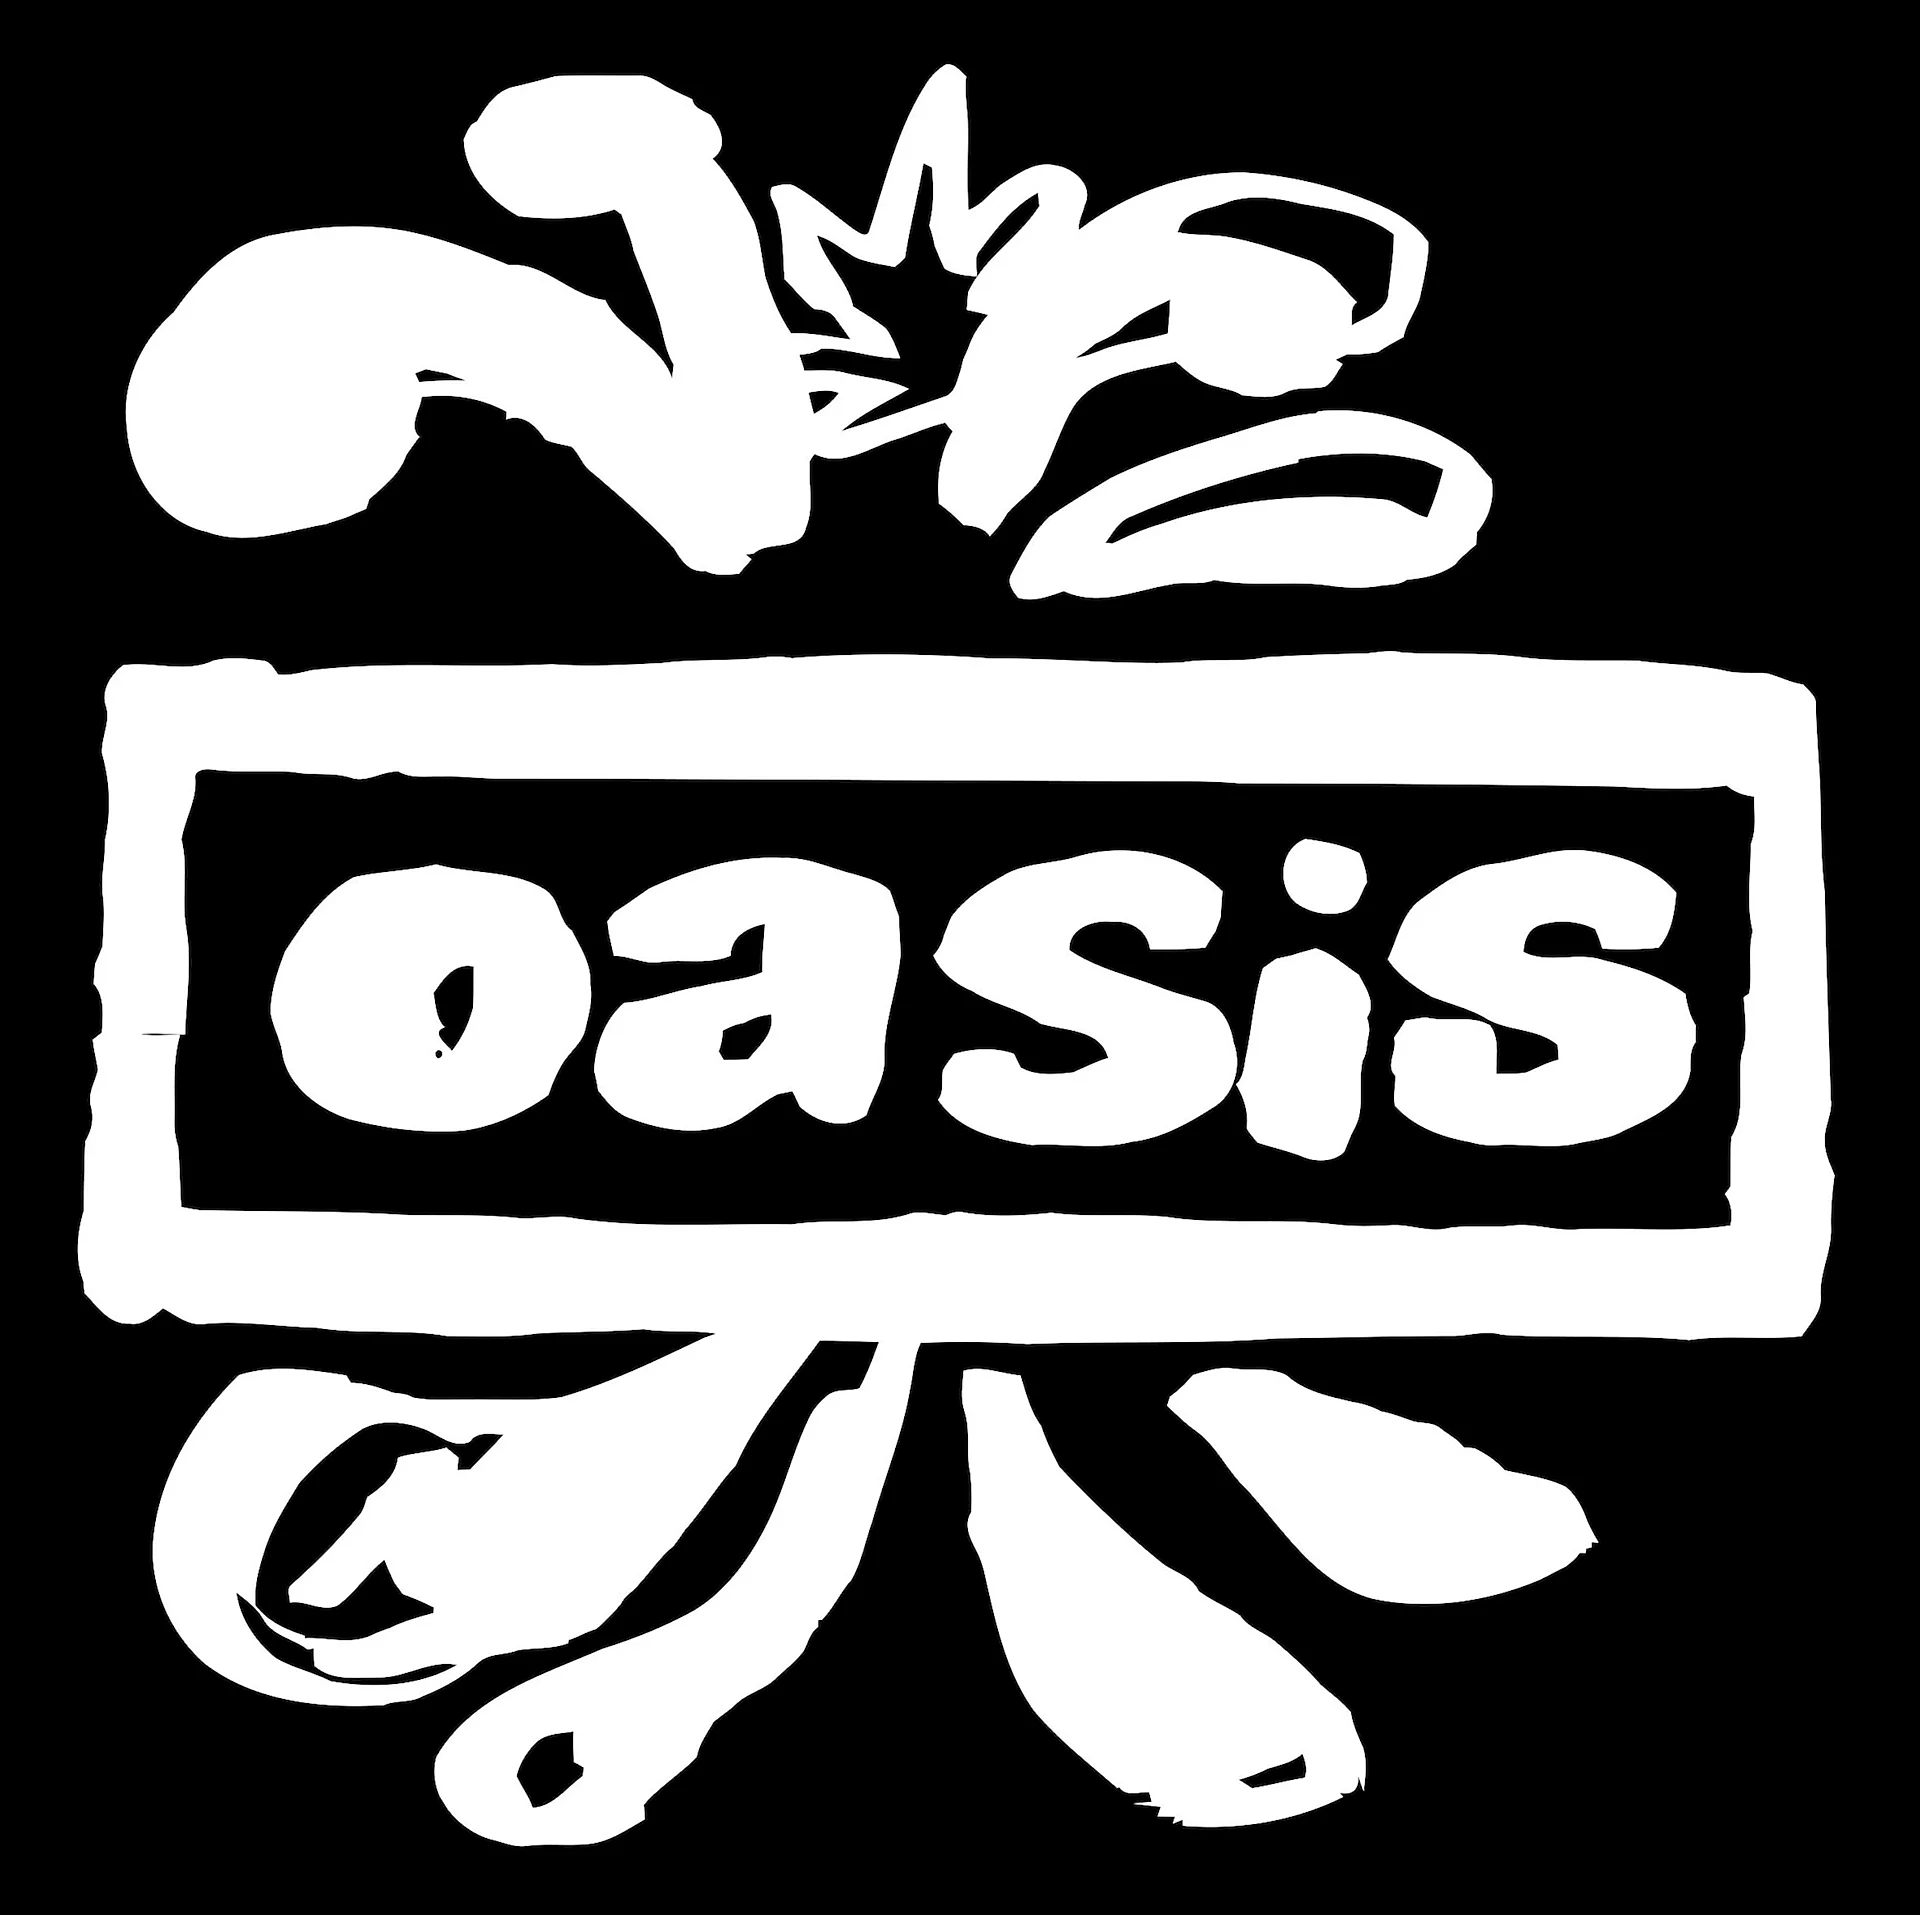 Oasis Band Logo Wallpaper